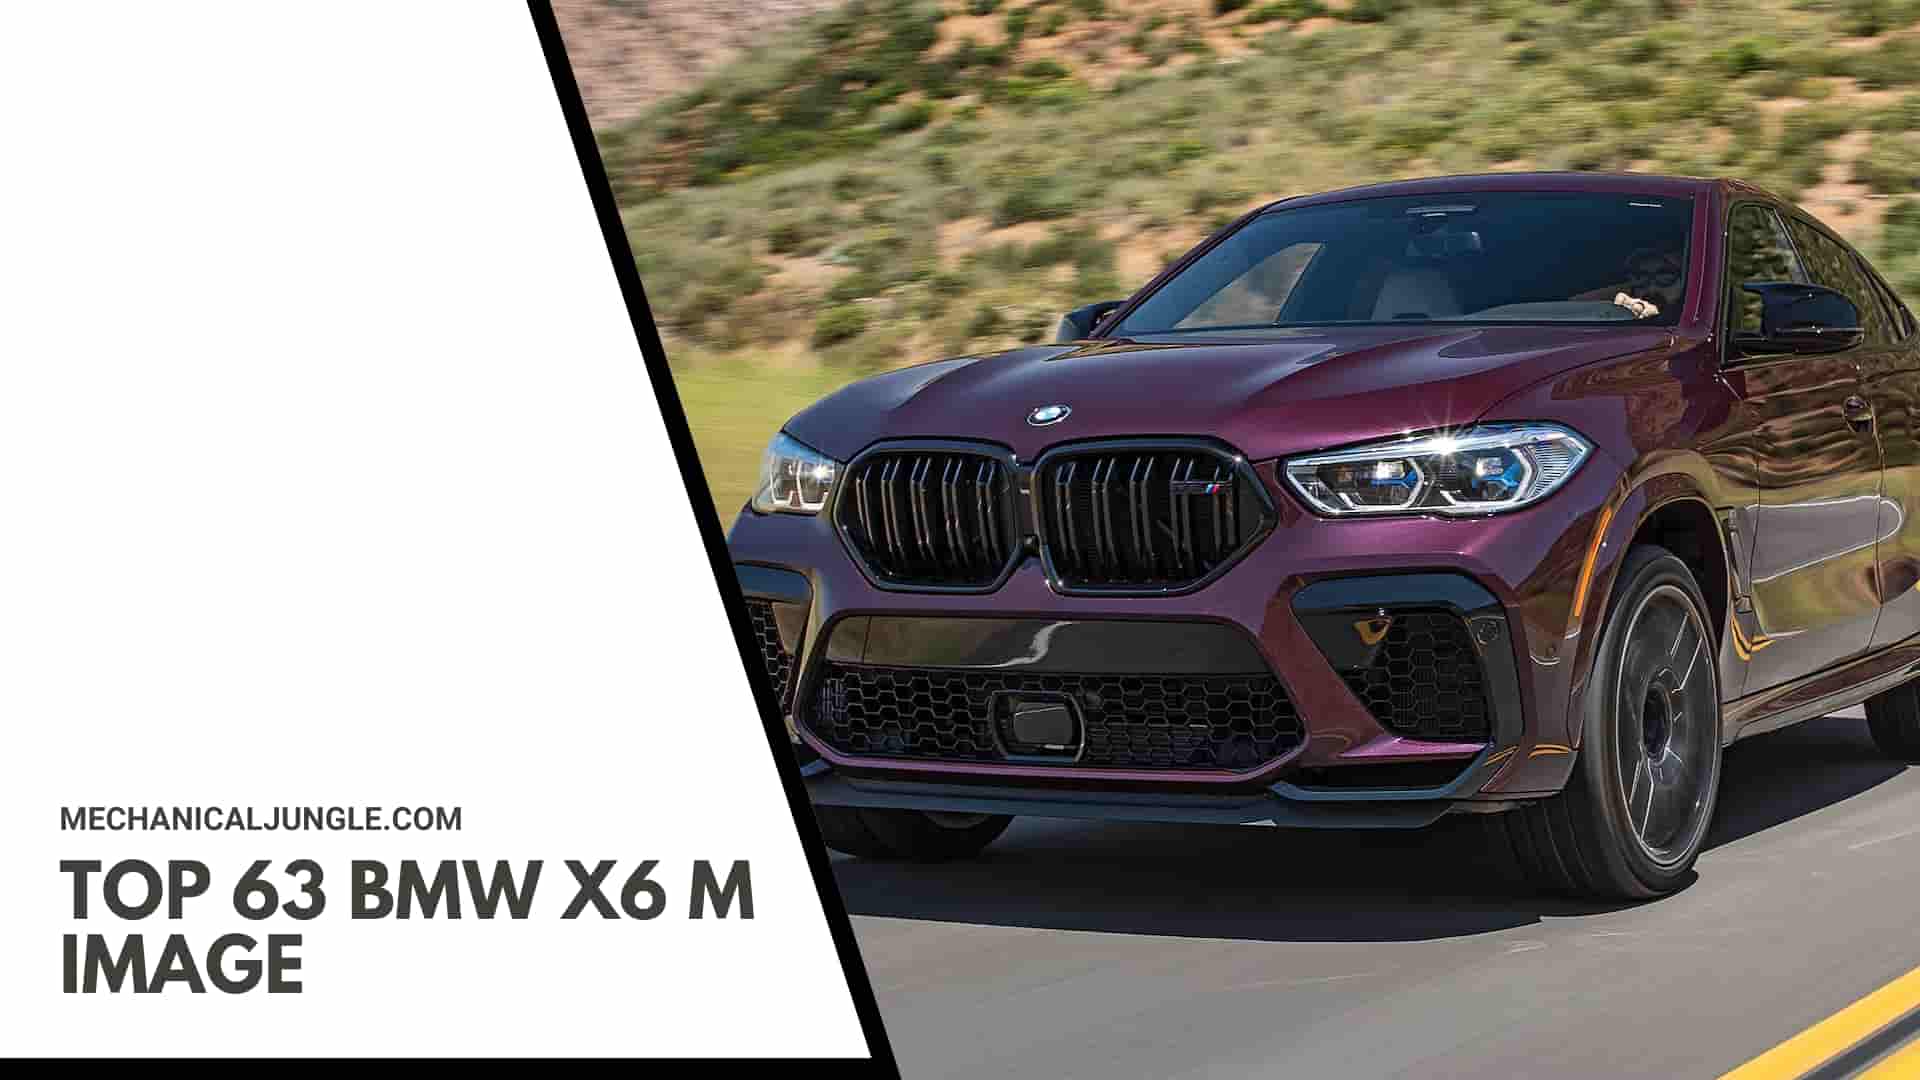 Top 63 BMW X6 M Image